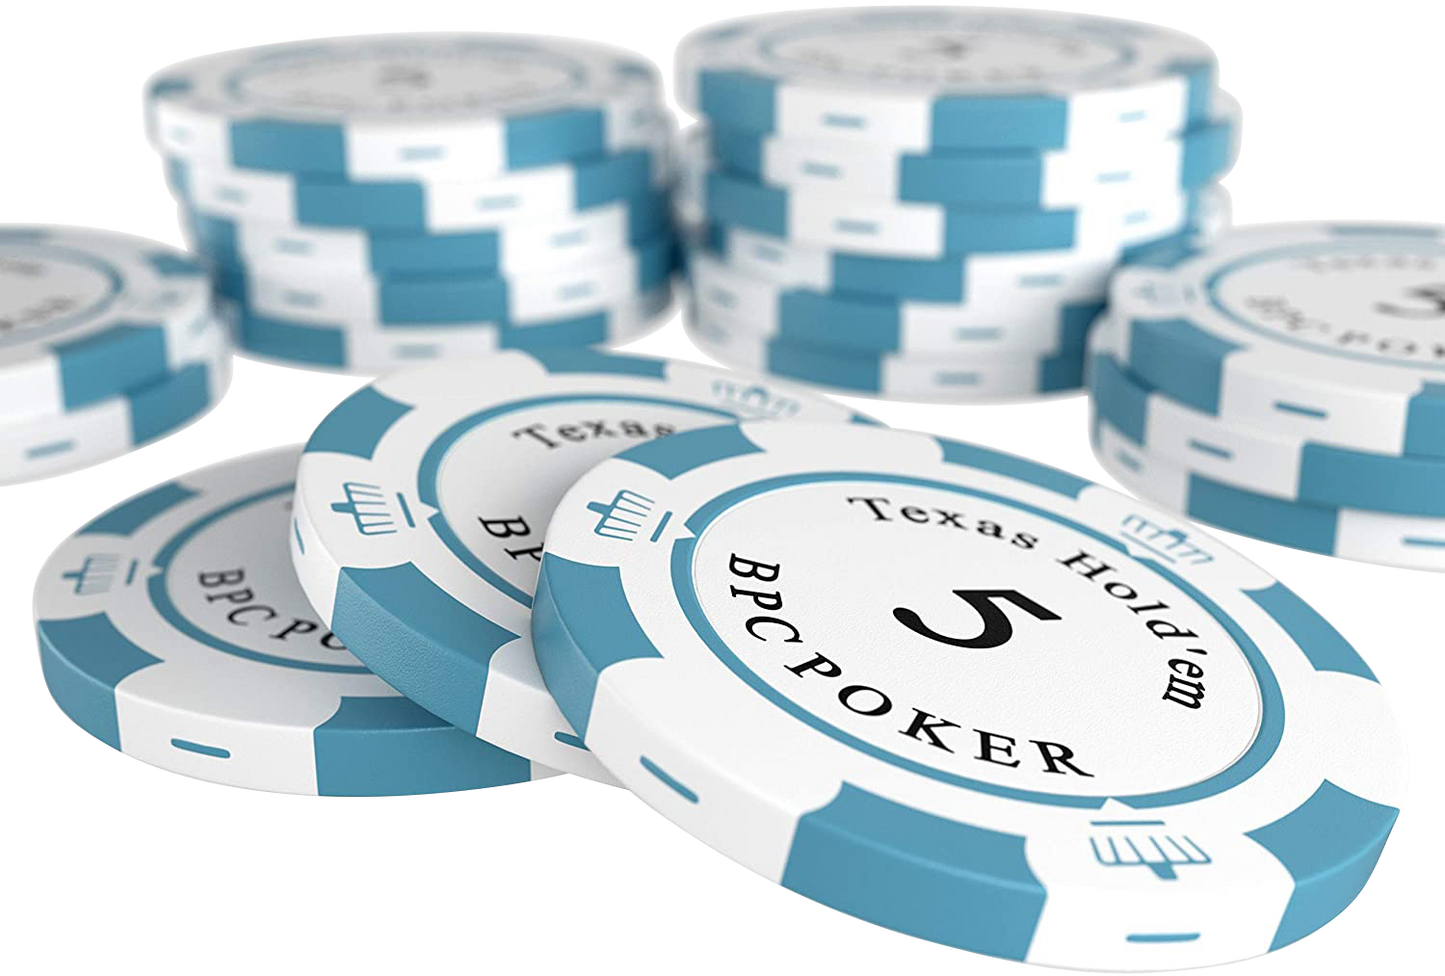 Mallette de poker avec 300 jetons de poker en argile "Carmela" avec valeurs